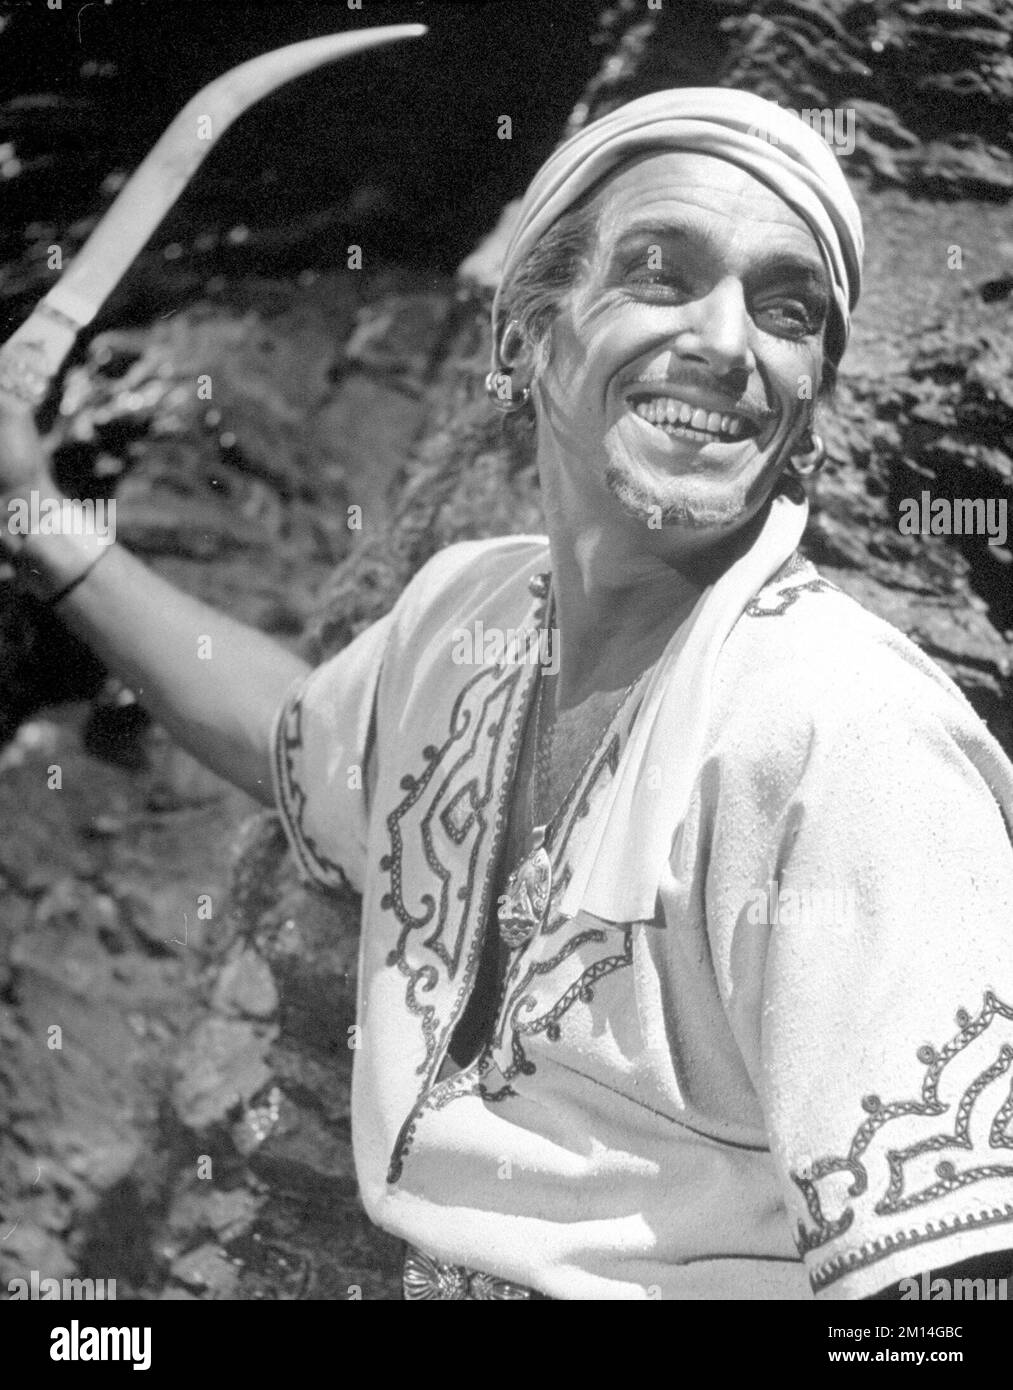 DOUGLAS FAIRBANKS JR. in SINBAD, THE SAILOR (1947), directed by RICHARD WALLACE. Credit: RKO / Album Stock Photo